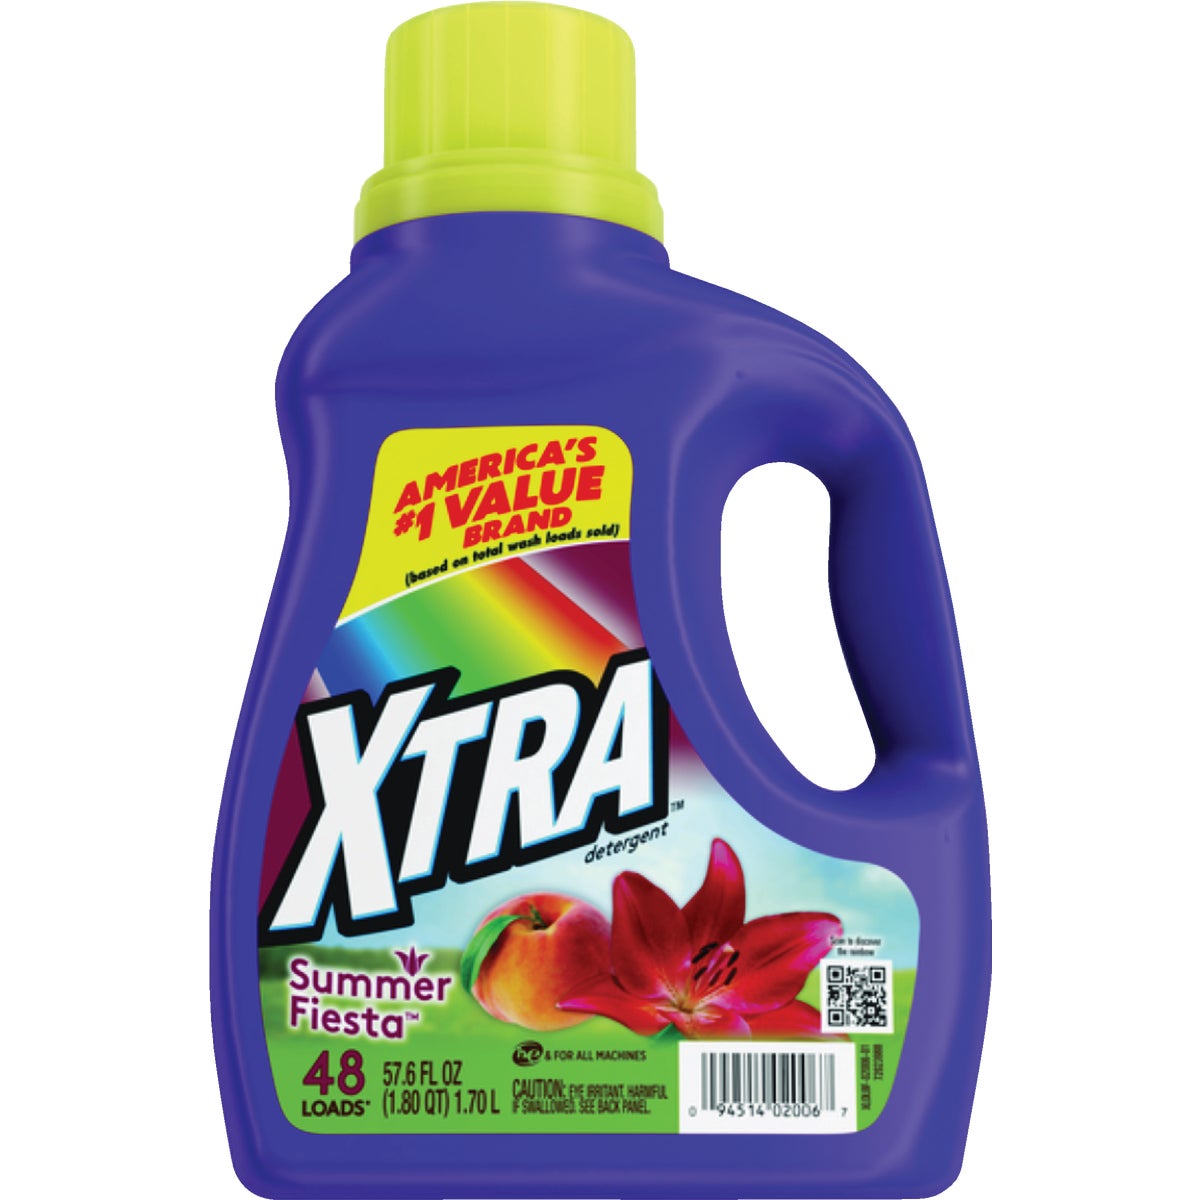 Xtra 57.6 Oz. Summer Fiesta Liquid Laundry Detergent